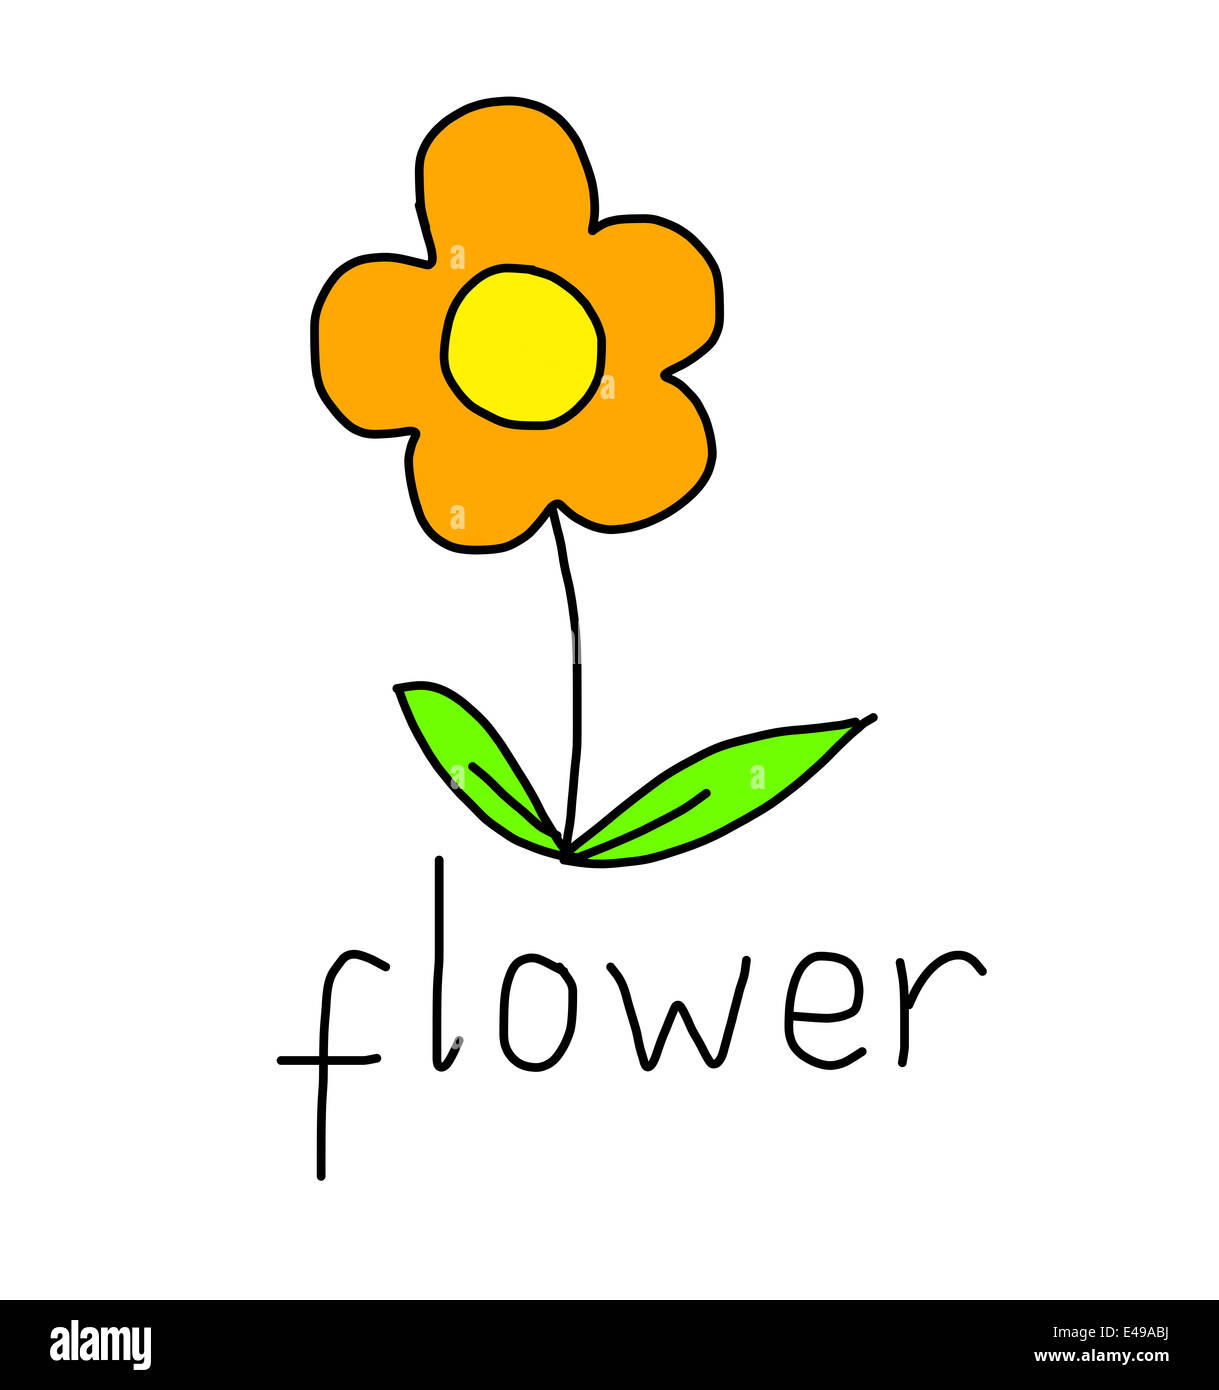 Illustration of alphabet words - flower Stock Photo